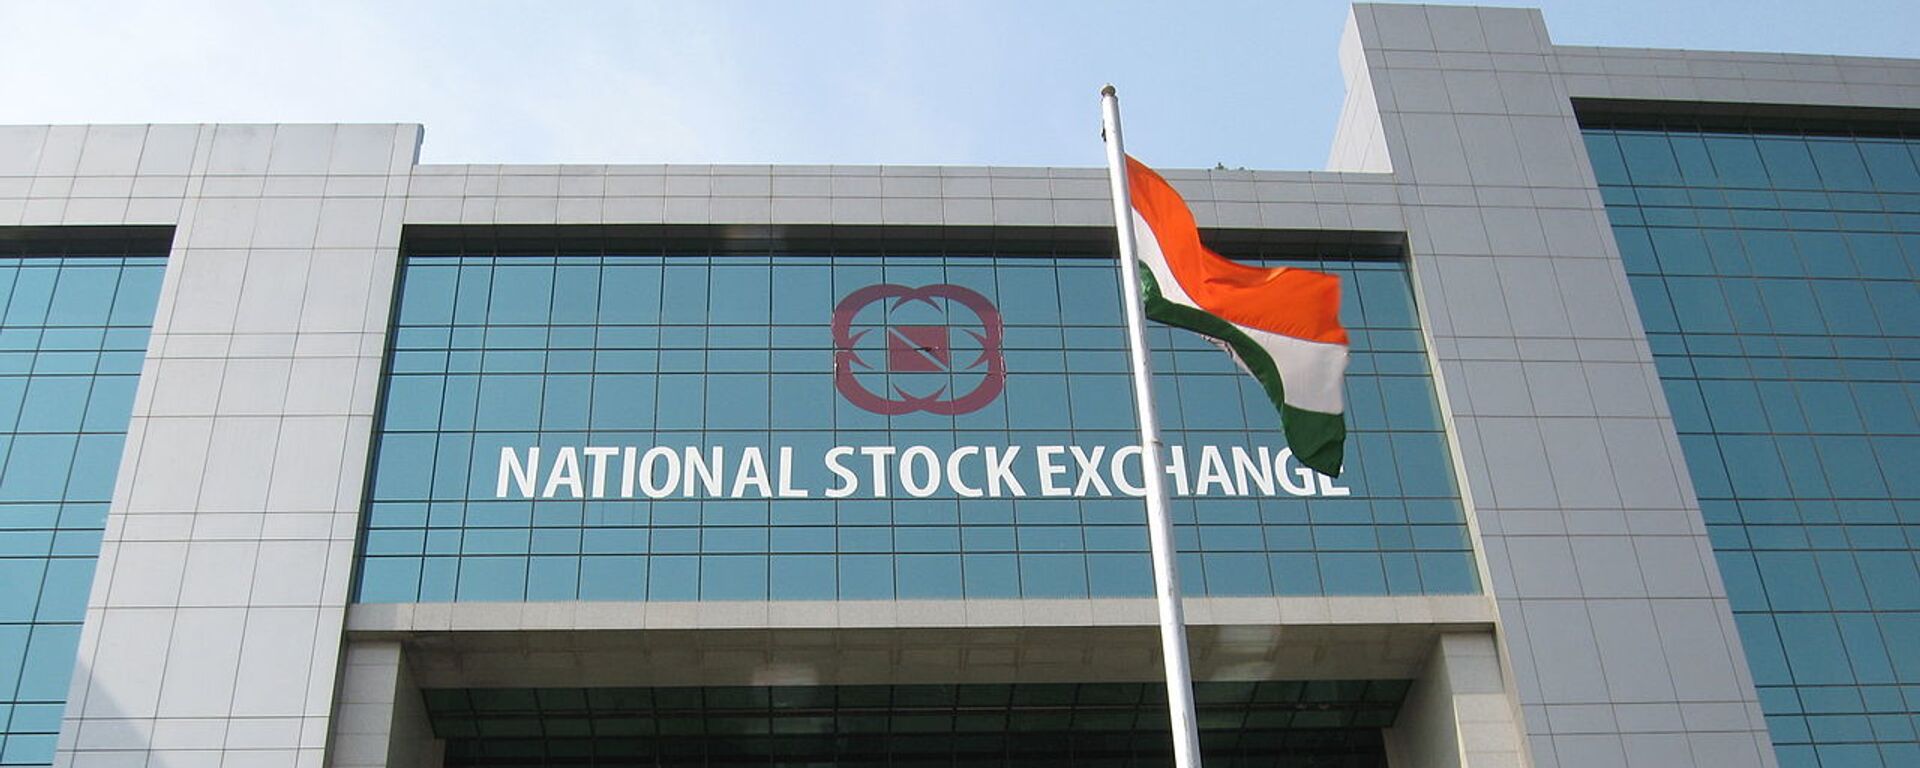 National Stock Exchange, Mumbai, India - Sputnik International, 1920, 11.11.2021